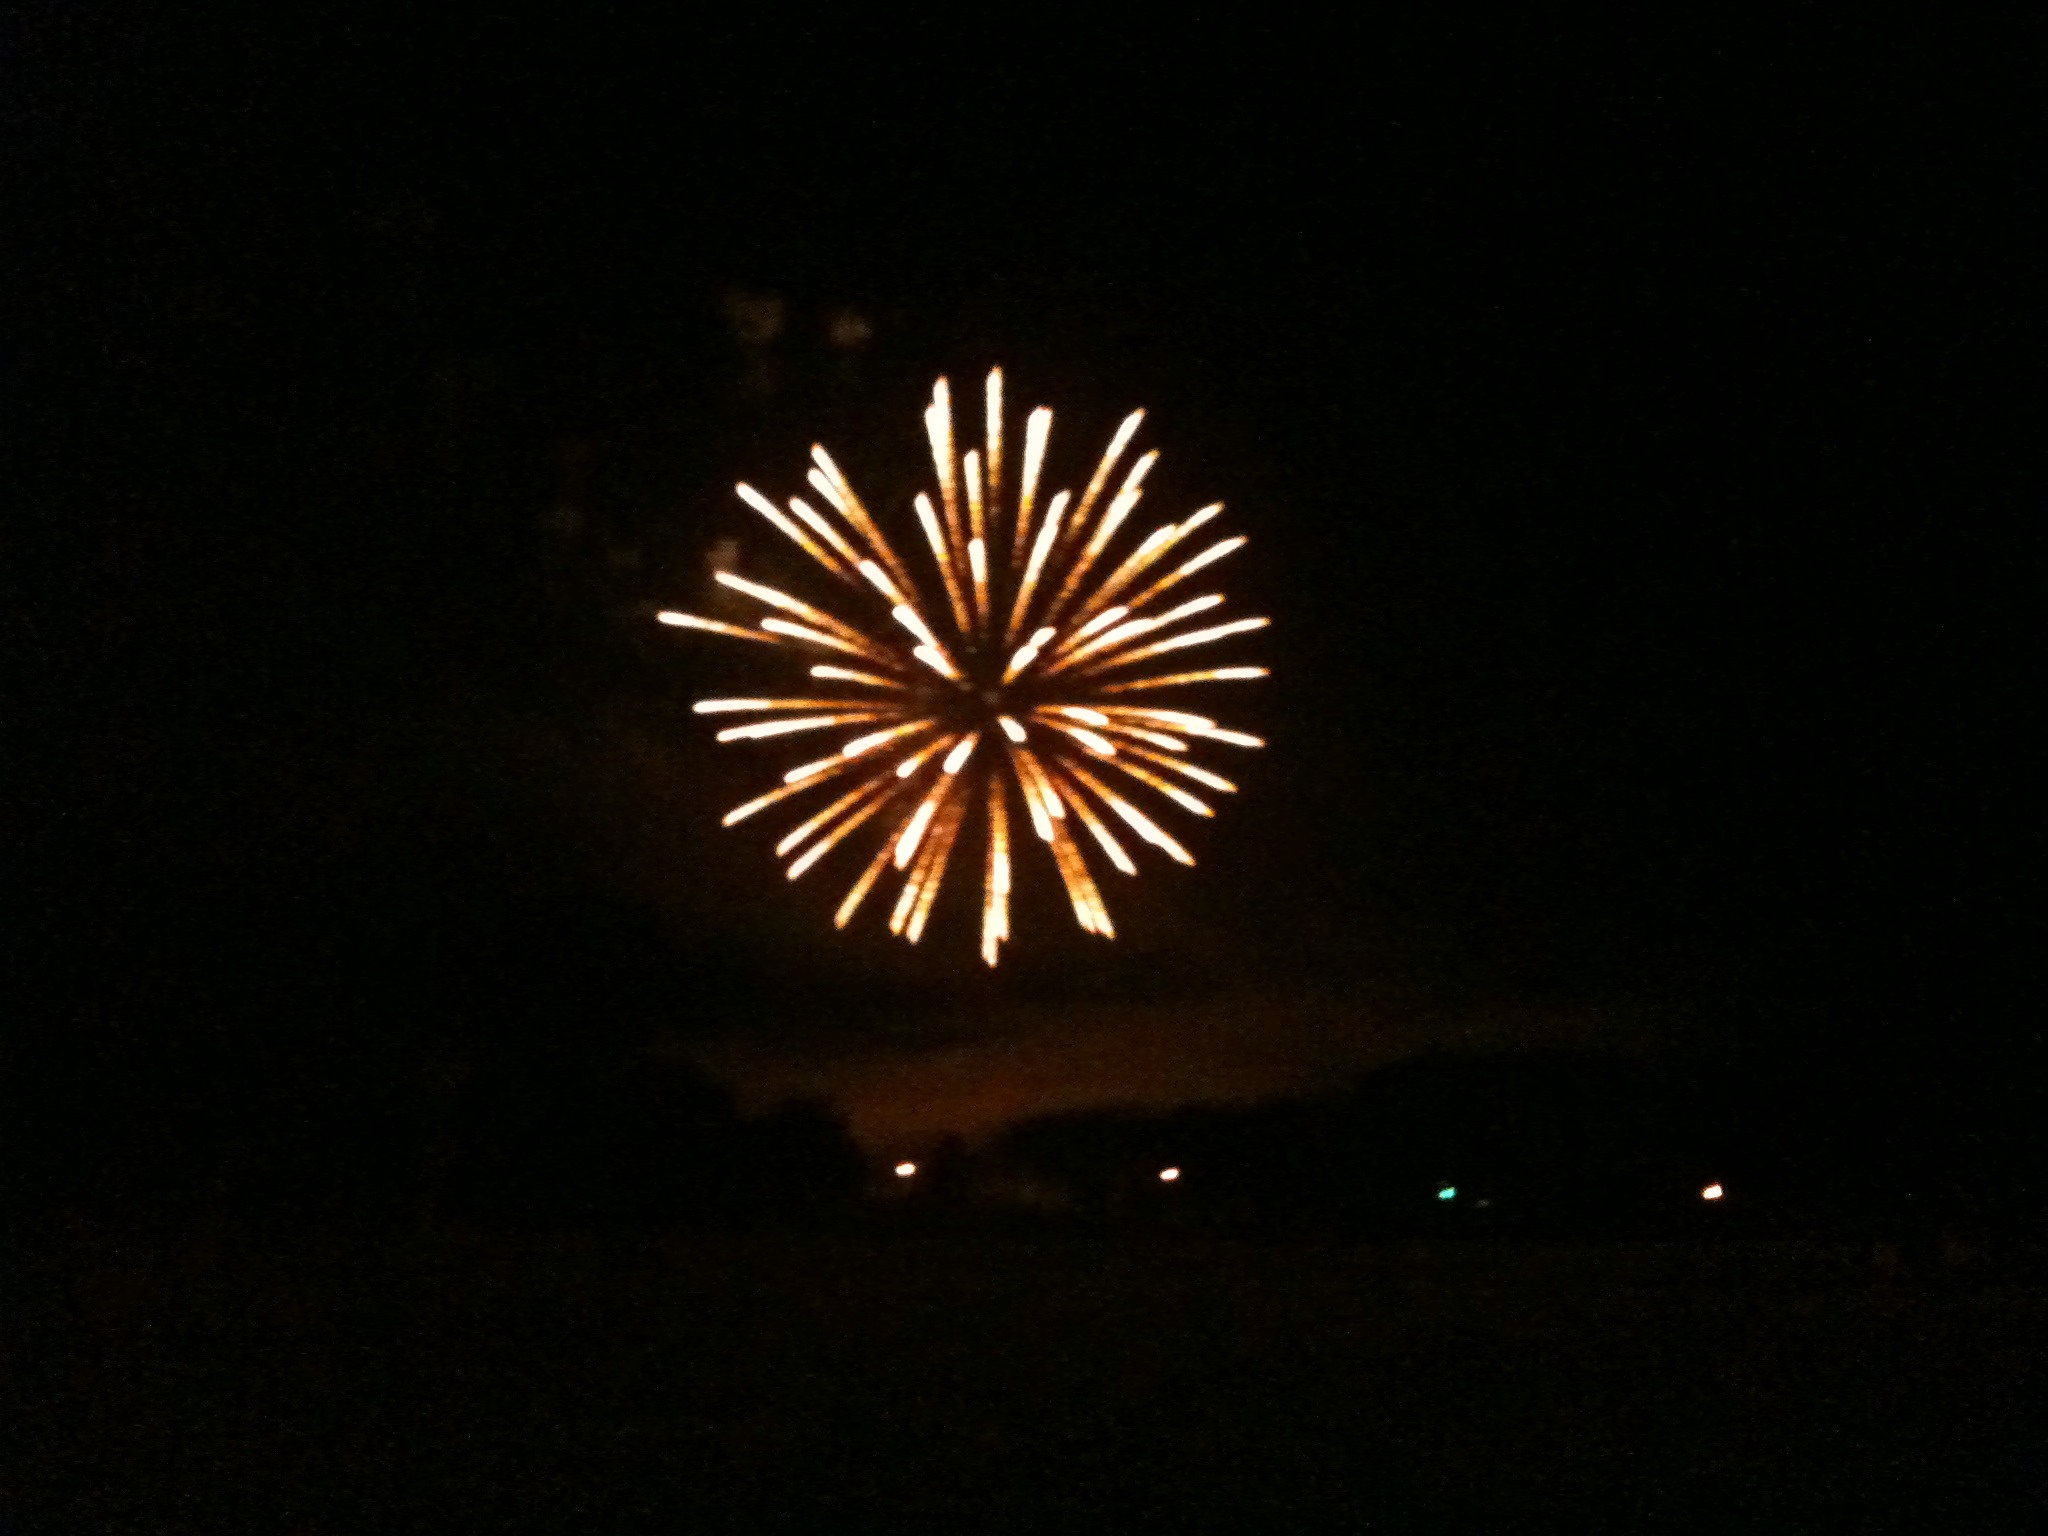 Mount Vernon Ohio Fireworks photo by Sam Miller